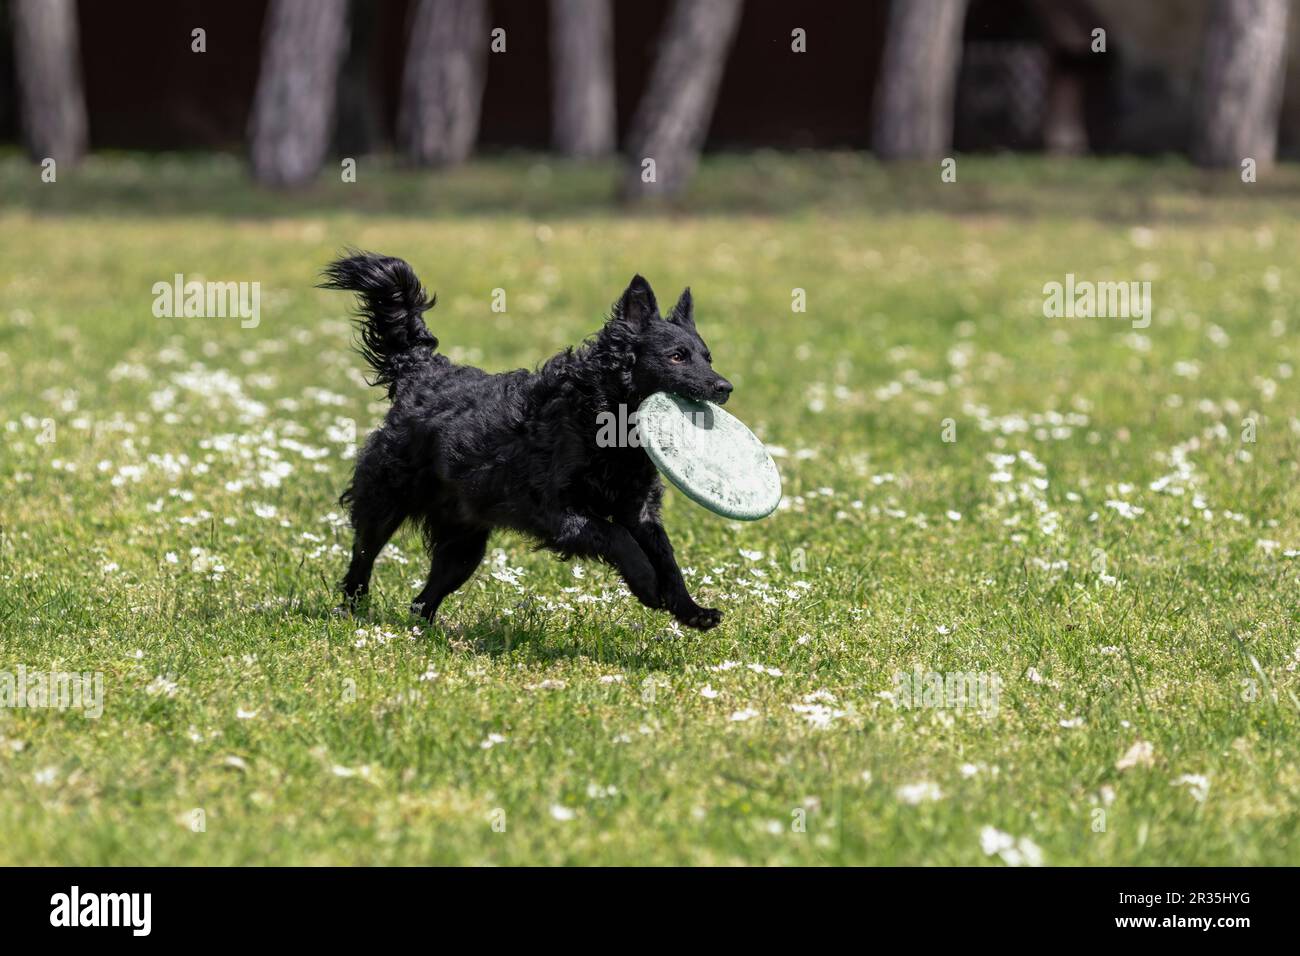 Black mudi dog playing with frisbee disc Stock Photo